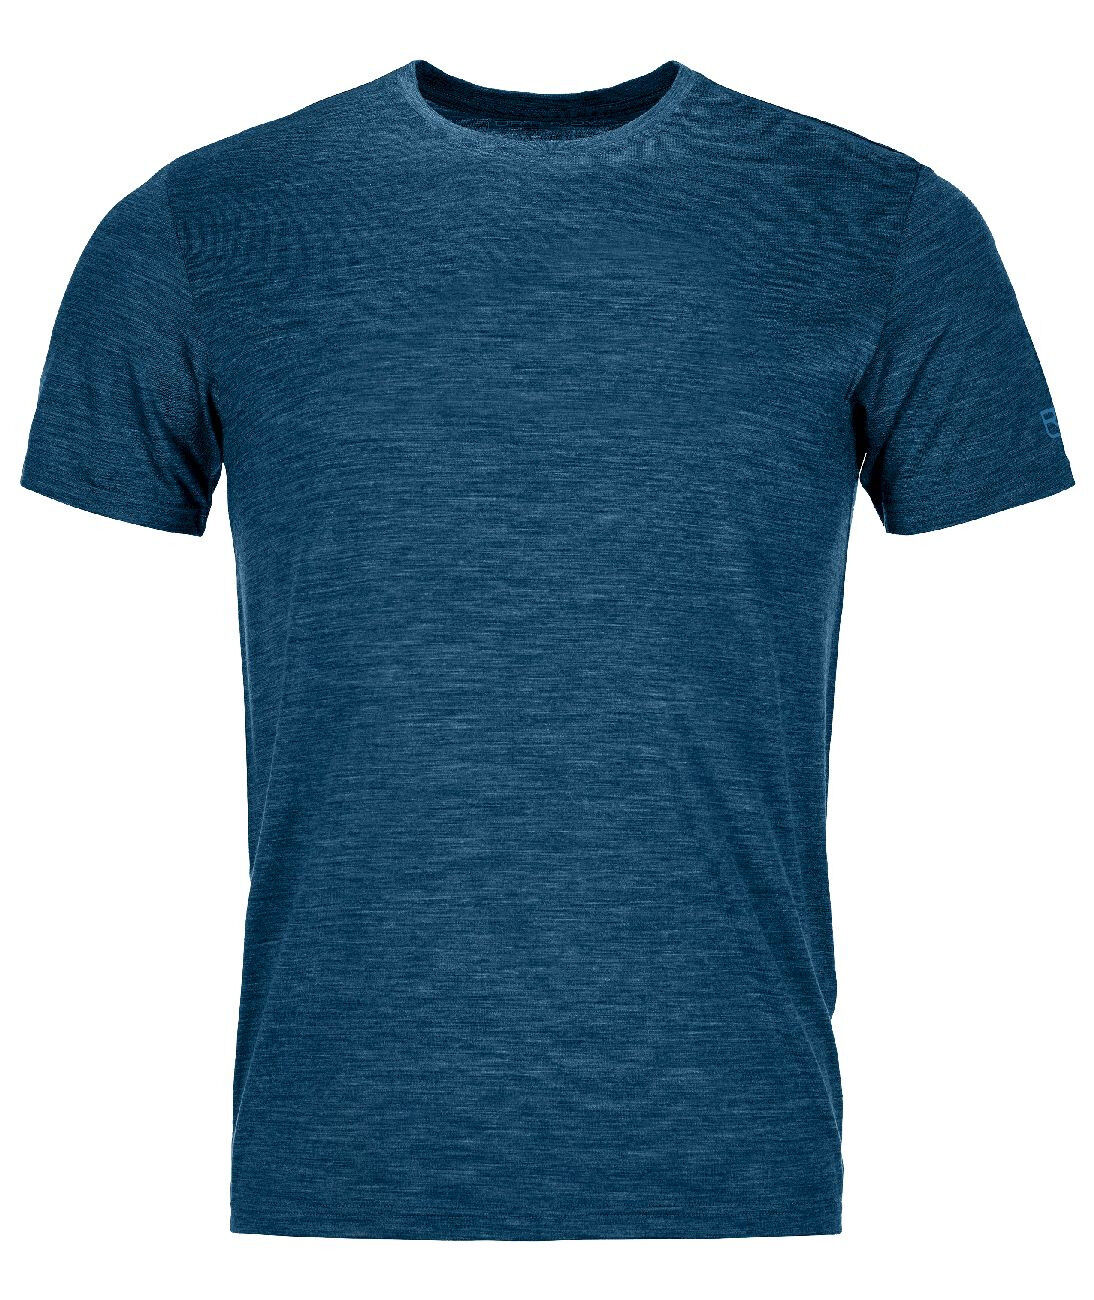 Ortovox 150 Cool Clean TS - T-shirt - Men's